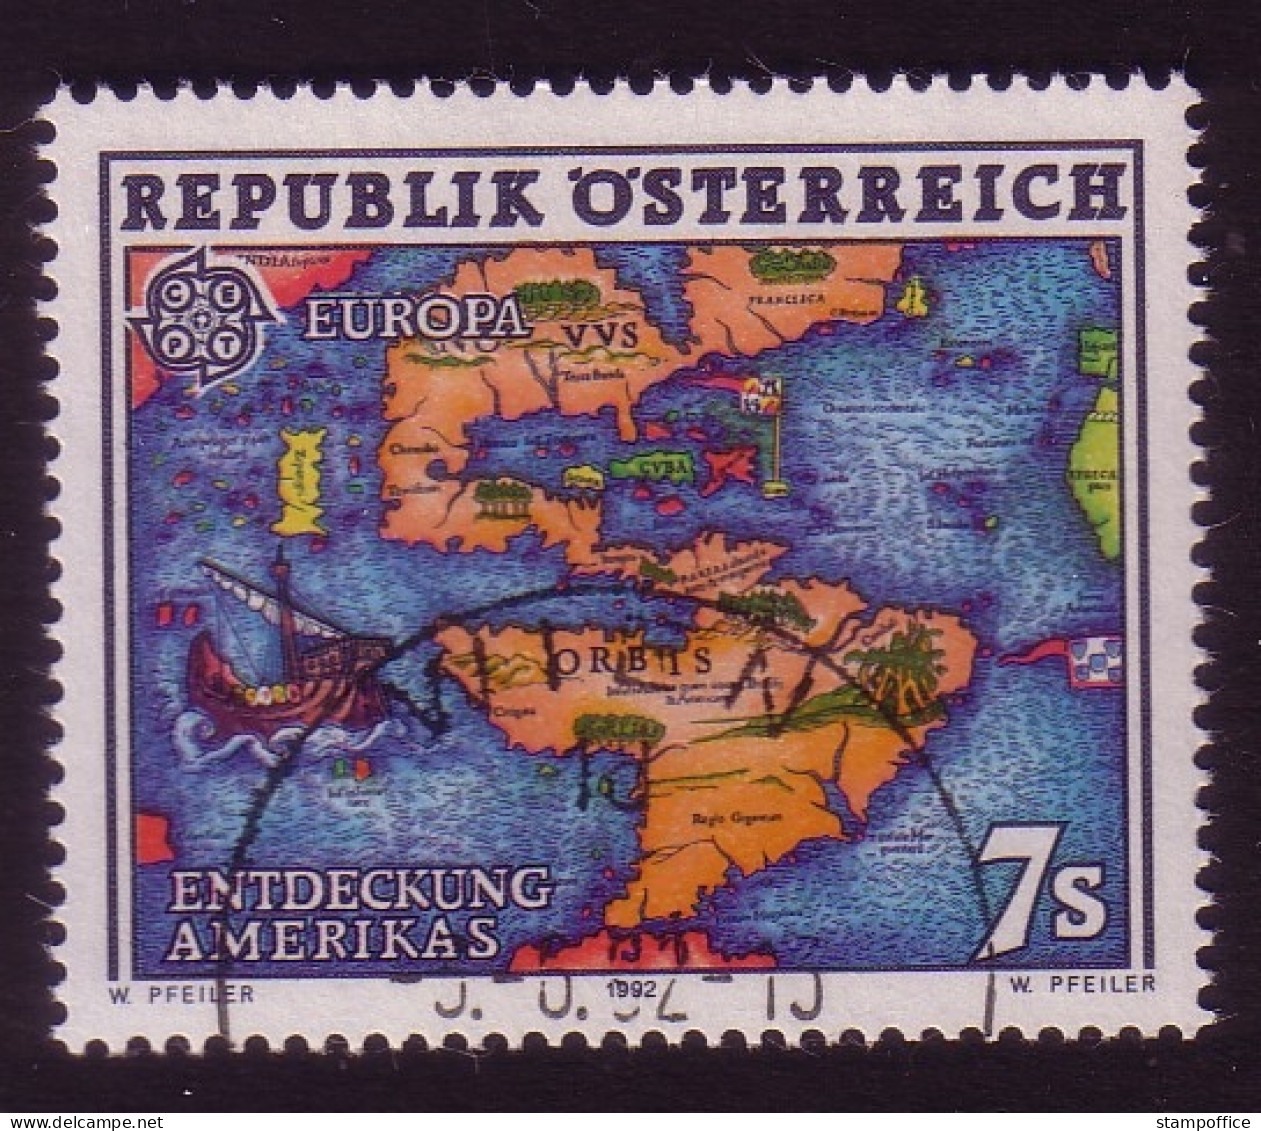 ÖSTERREICH MI-NR. 2062 GESTEMPELT(USED) EUROPA 1992 ENTDECKUNG AMERIKAS - 1992